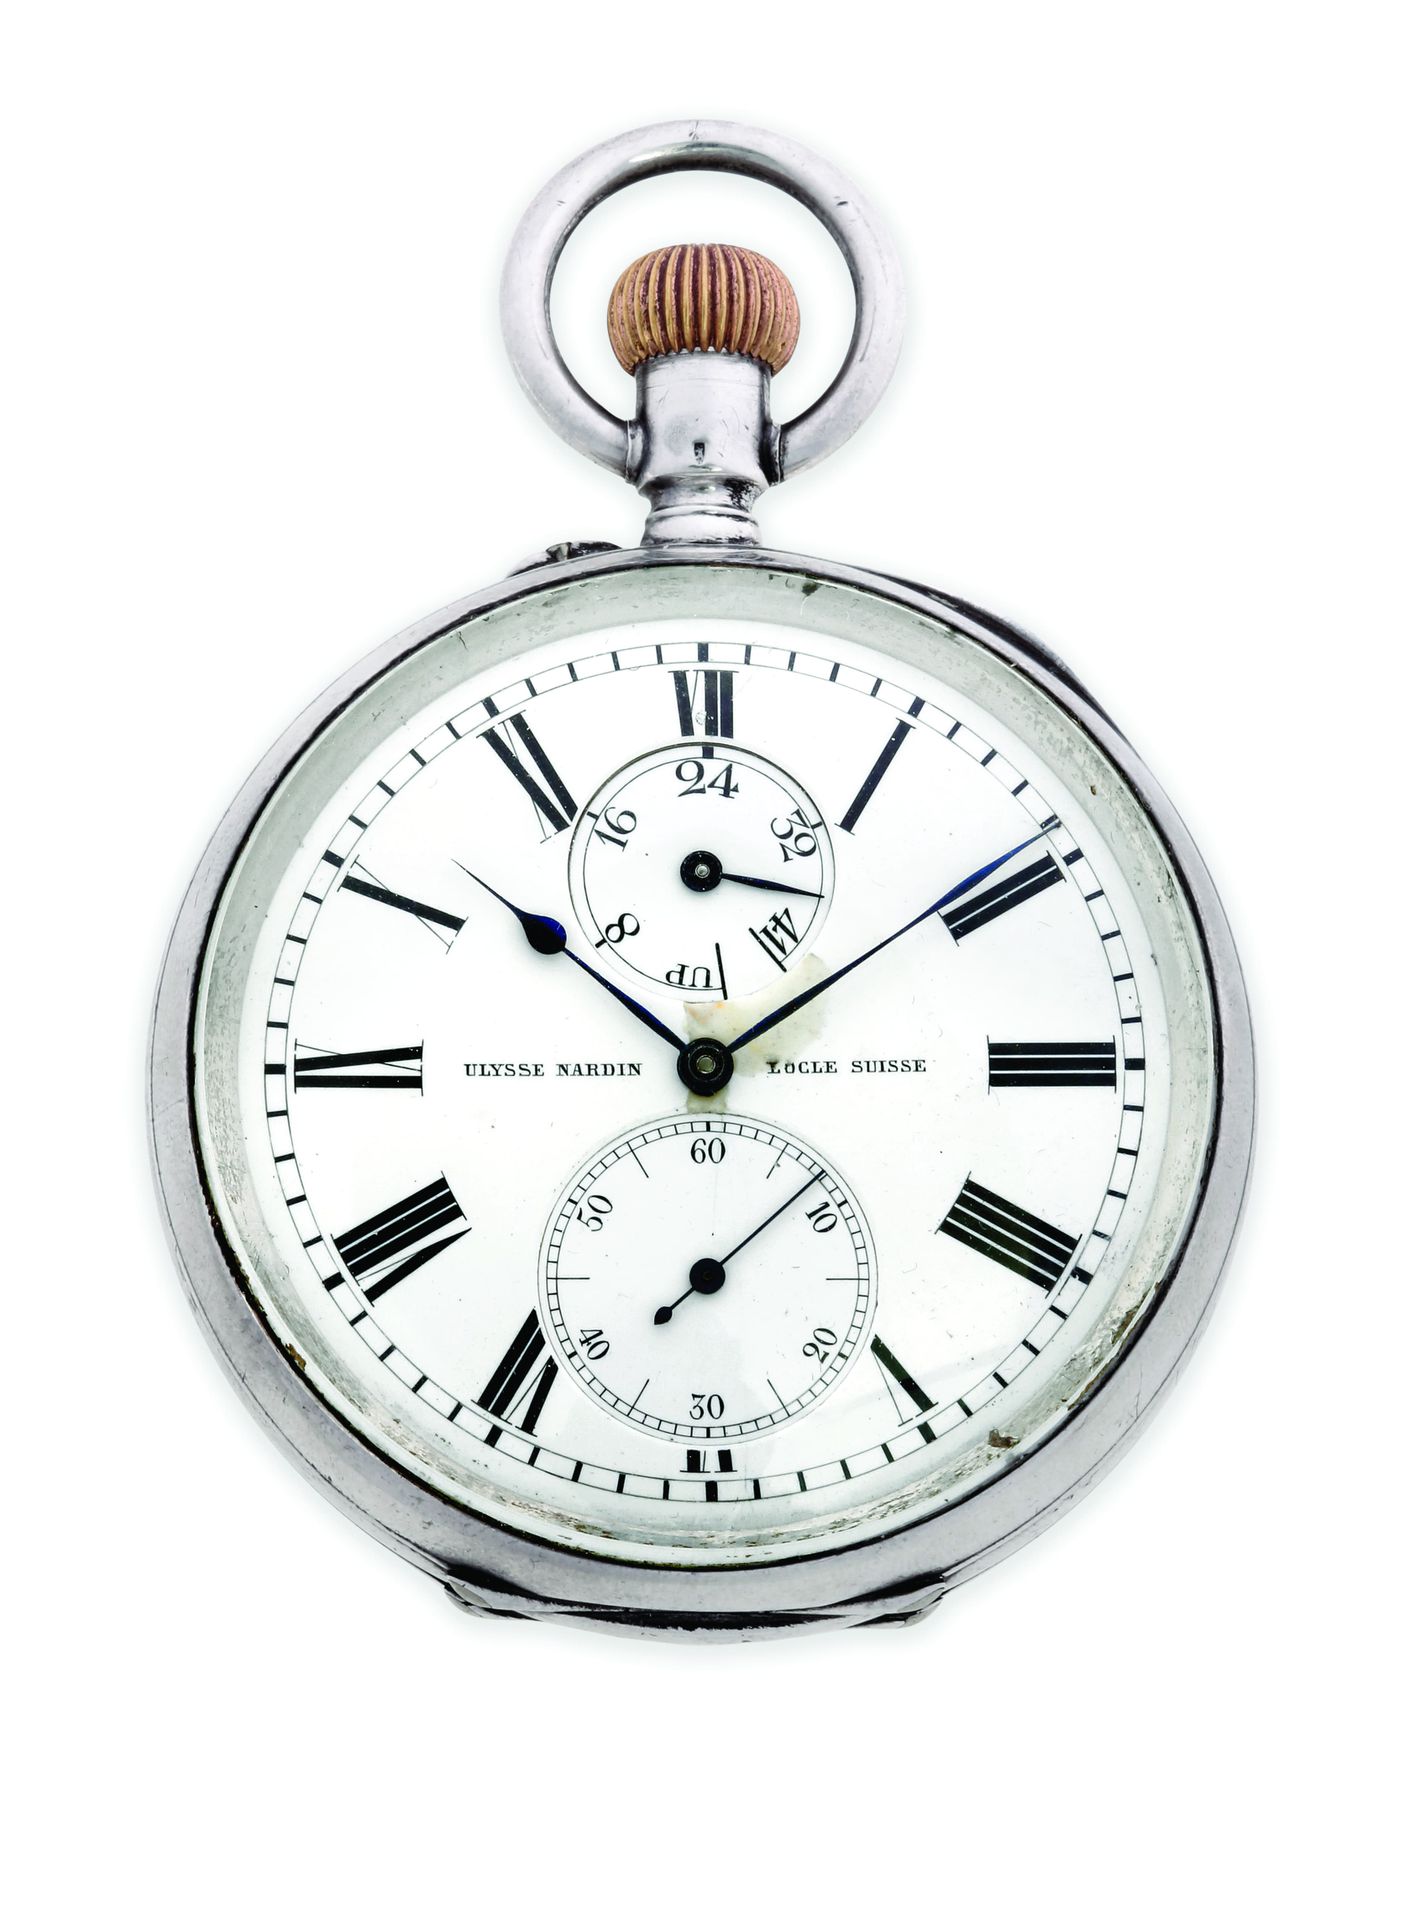 ULYSSE NARDIN US NAVY - N°10977
800 thousandths silver pocket watch with mechani&hellip;